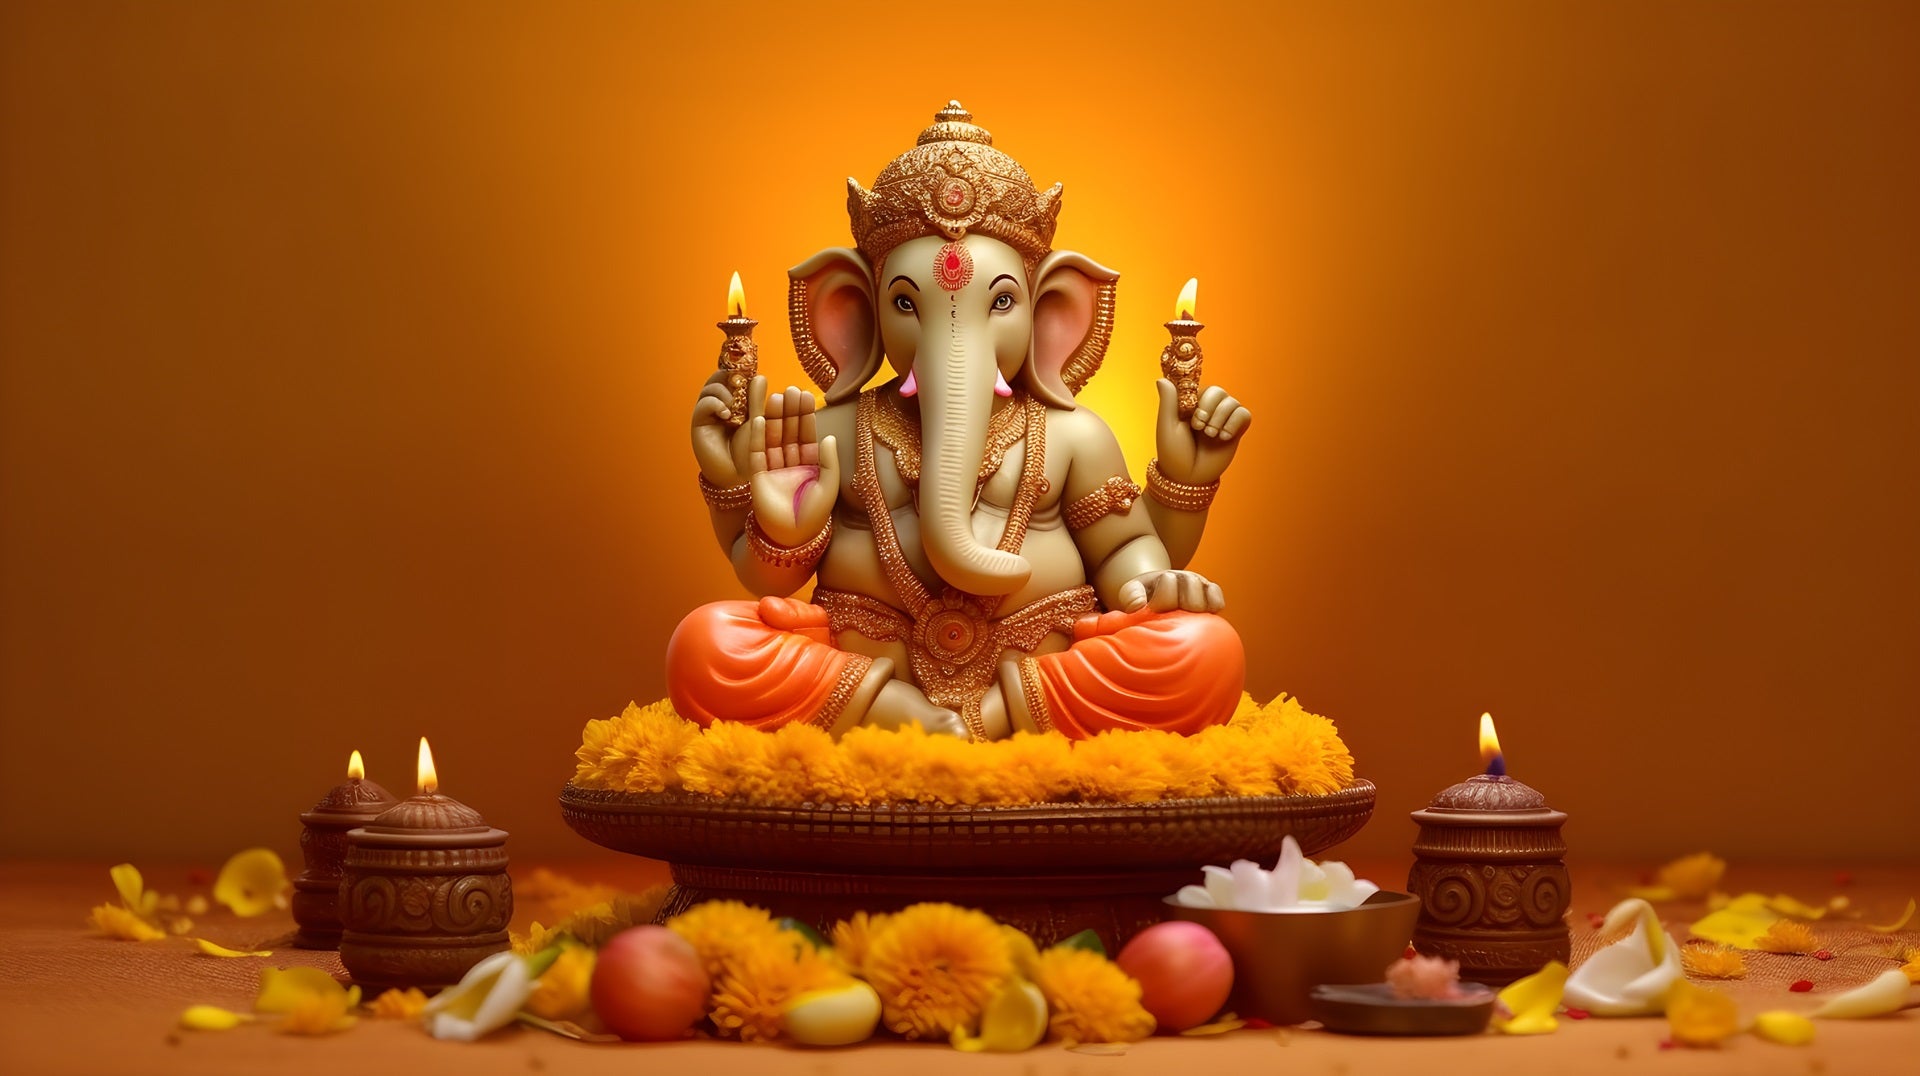 Buy GoldGiftIdeas Vighnaharta Ganesha Idol for Gift, Ganpati Showpiece for  Home Decor & Office, Unique Return Gift, Ganesha Metal Figurine Idol for  Gift (13 CM x 18 CM) Online at Low Prices